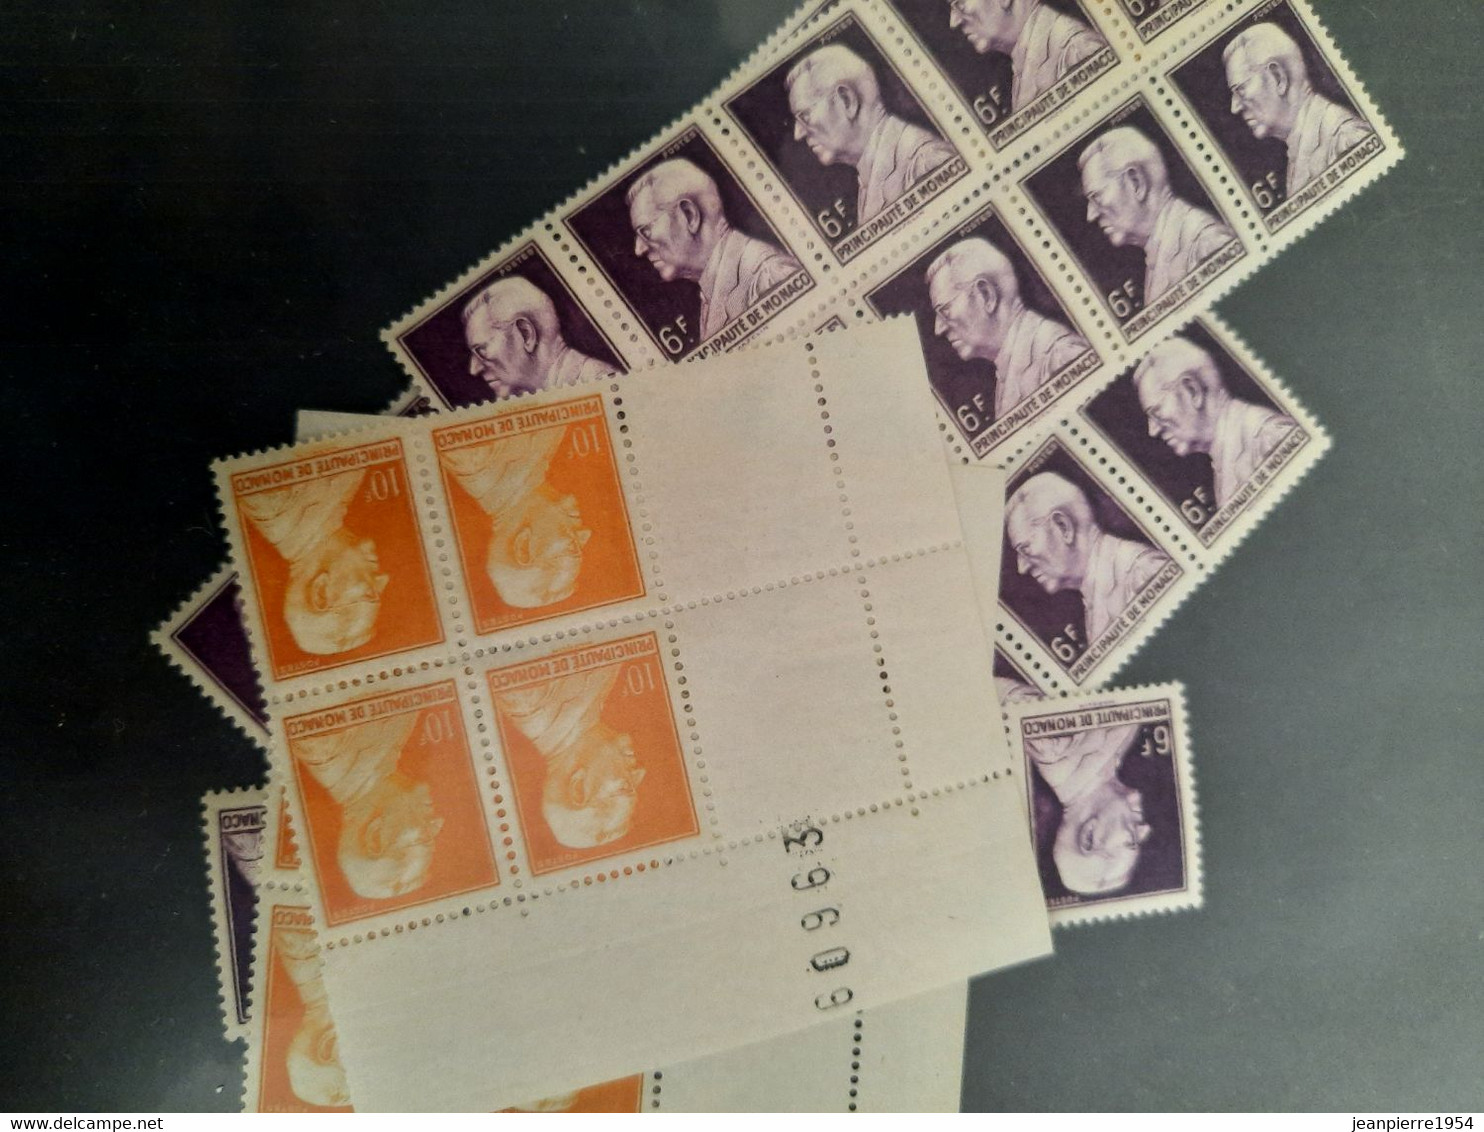 anciens timbres monaco neufxxx